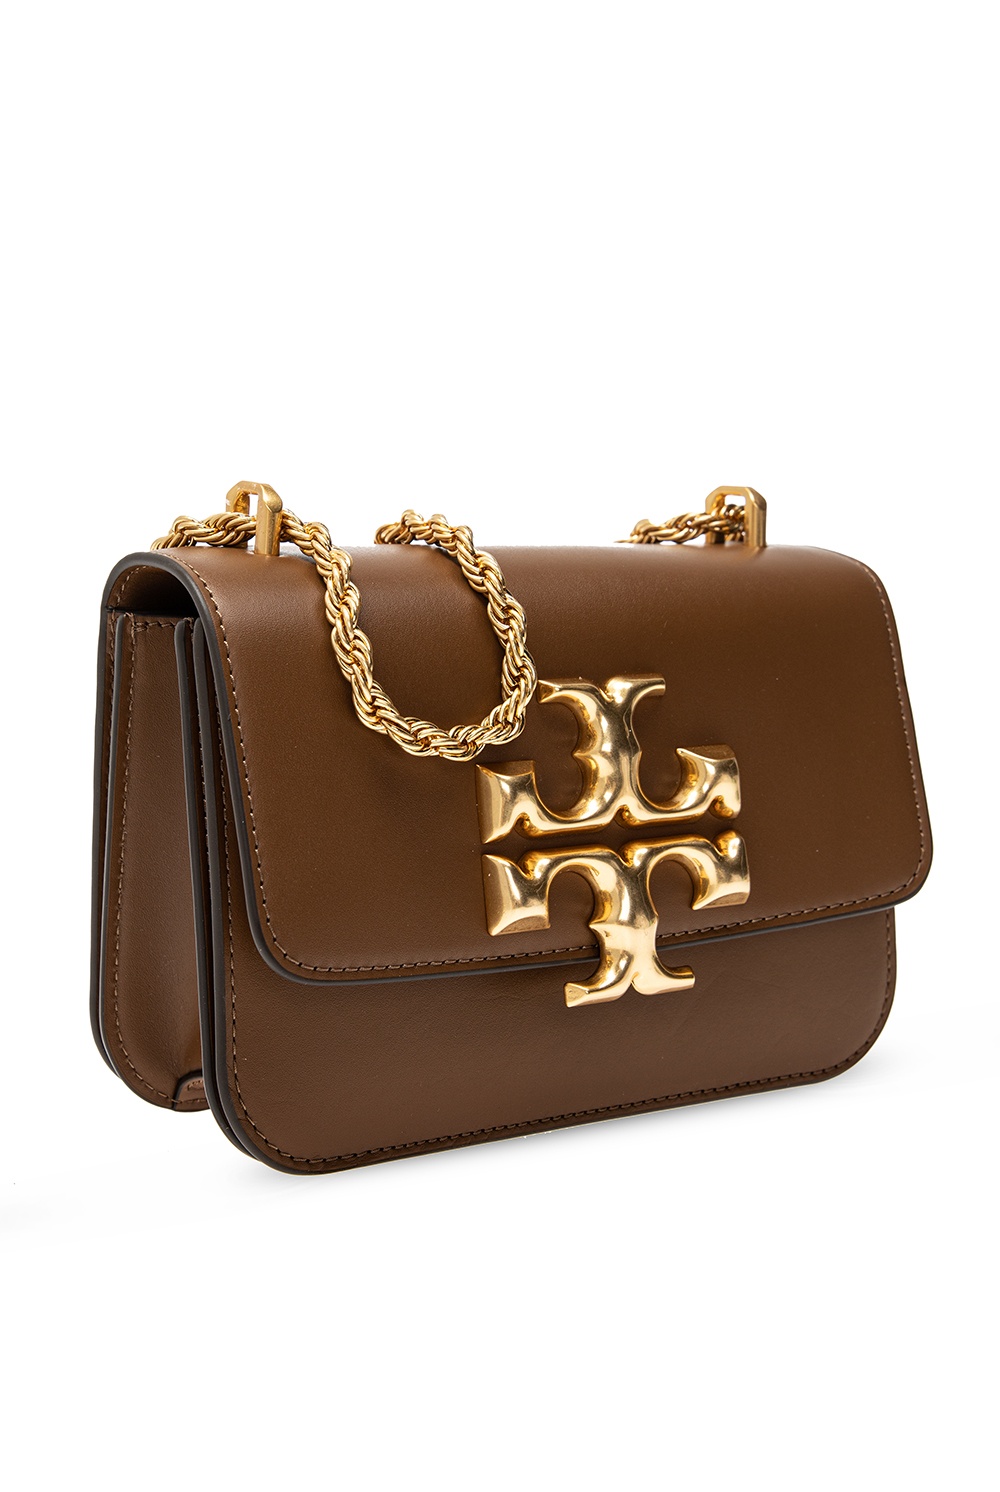 Tory Burch bags big size handbag with chain sling